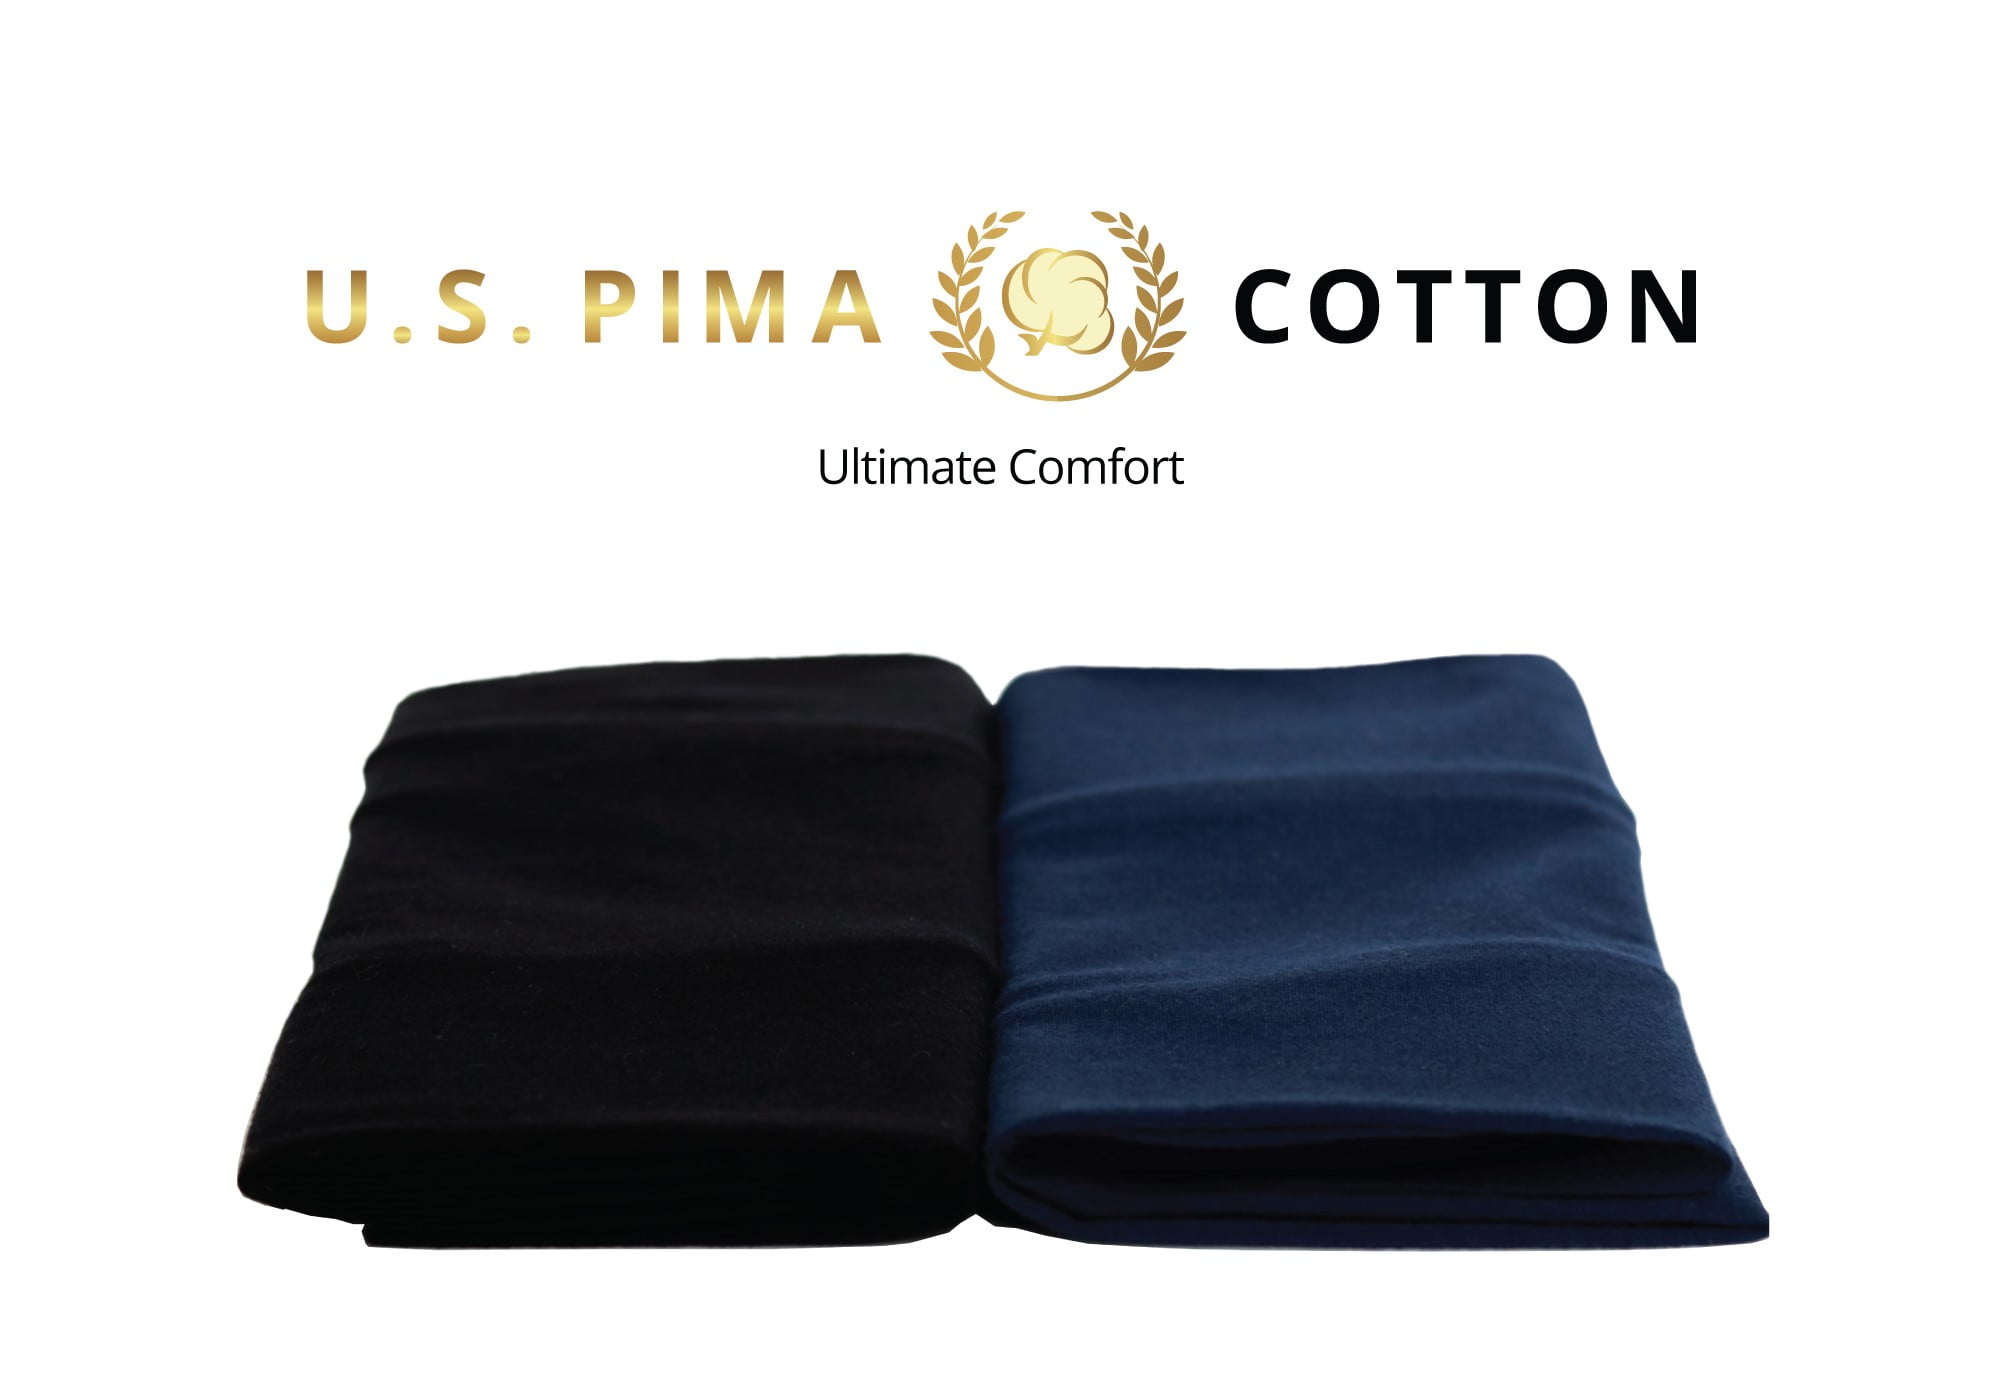 bahan kaos U.S Pima Cotton untuk pakaian wanita